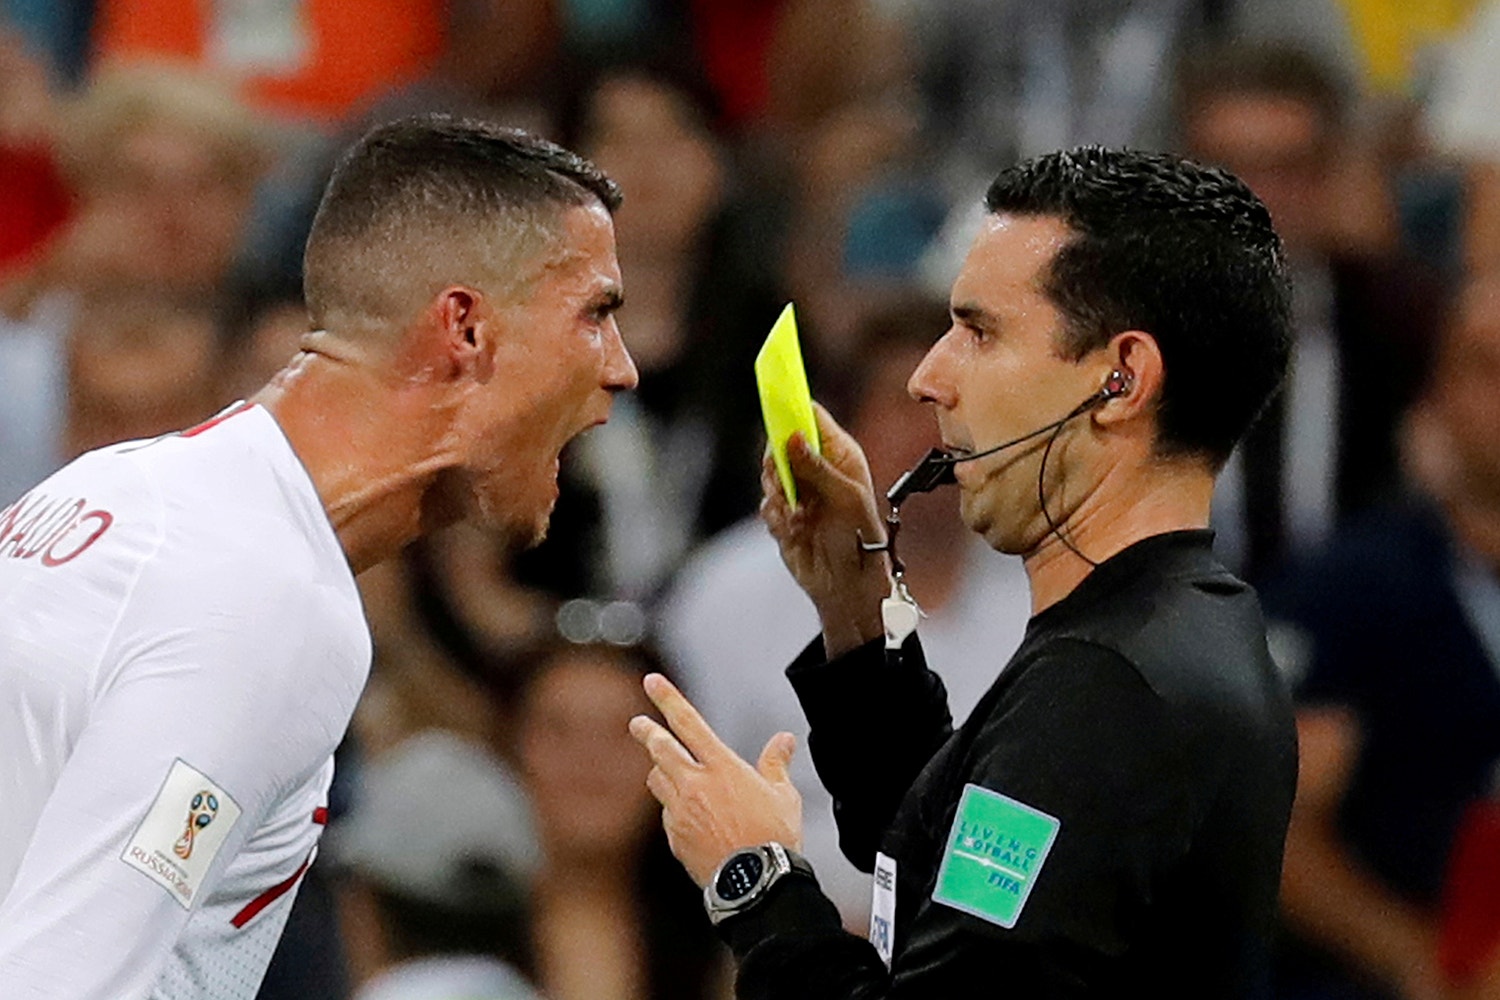  Cristiano Ronaldo confronta o &aacute;rbitro durante o jogo no Mundial entre a sele&ccedil;&atilde;o portuguesa e Uruguai /Toru Hanai - Reuters 